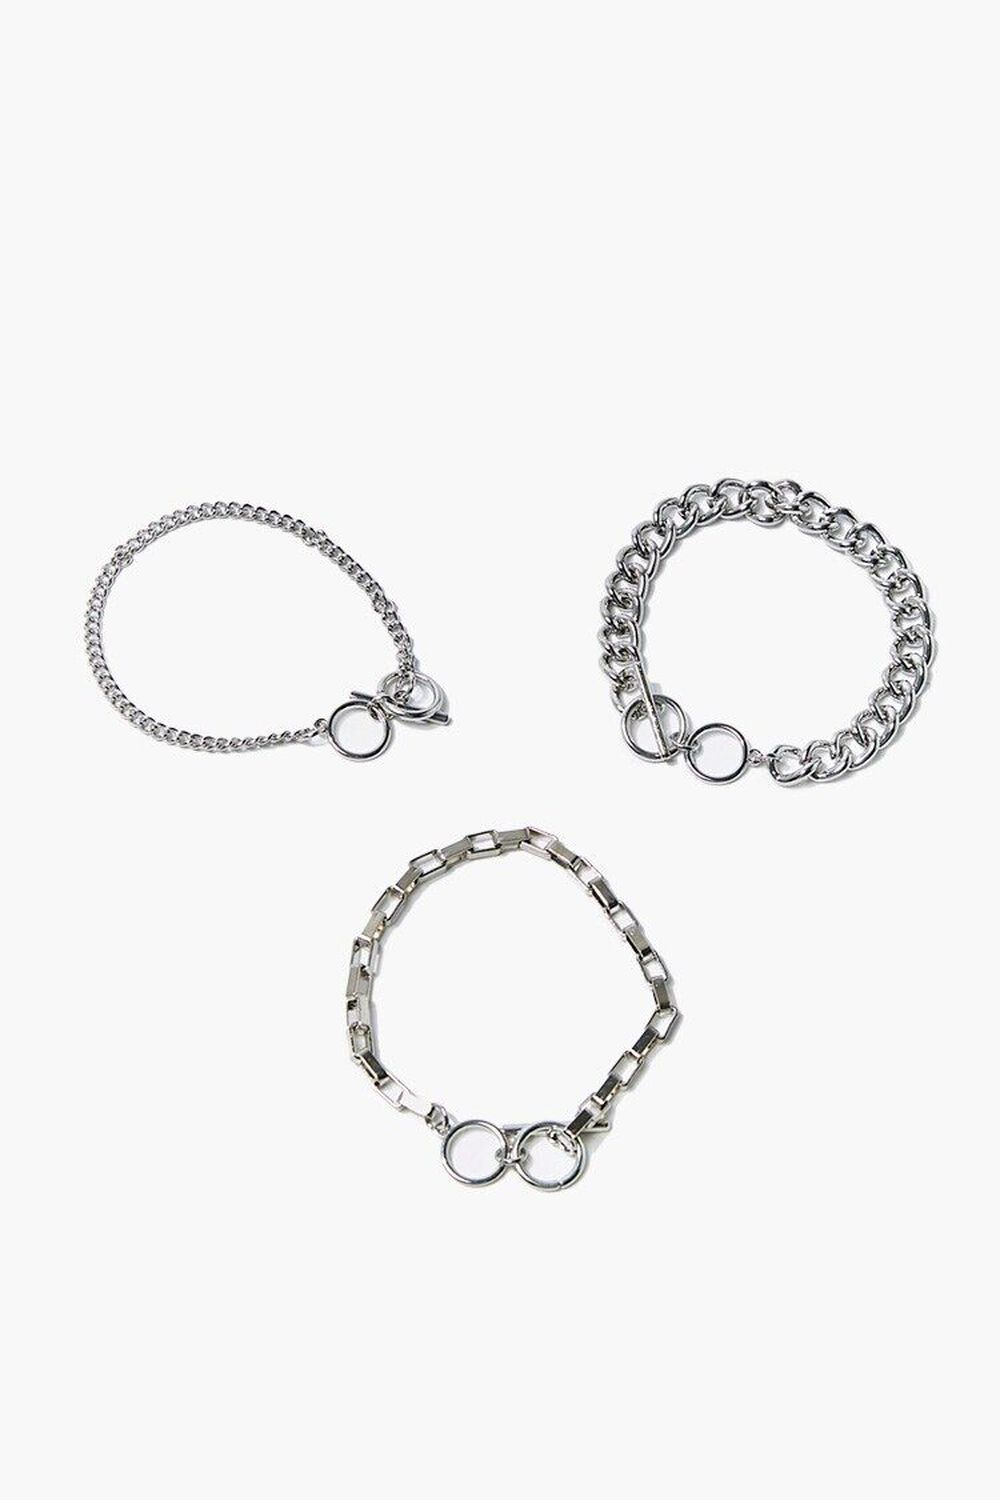 SILVER Toggle Chain Bracelet Set, image 1